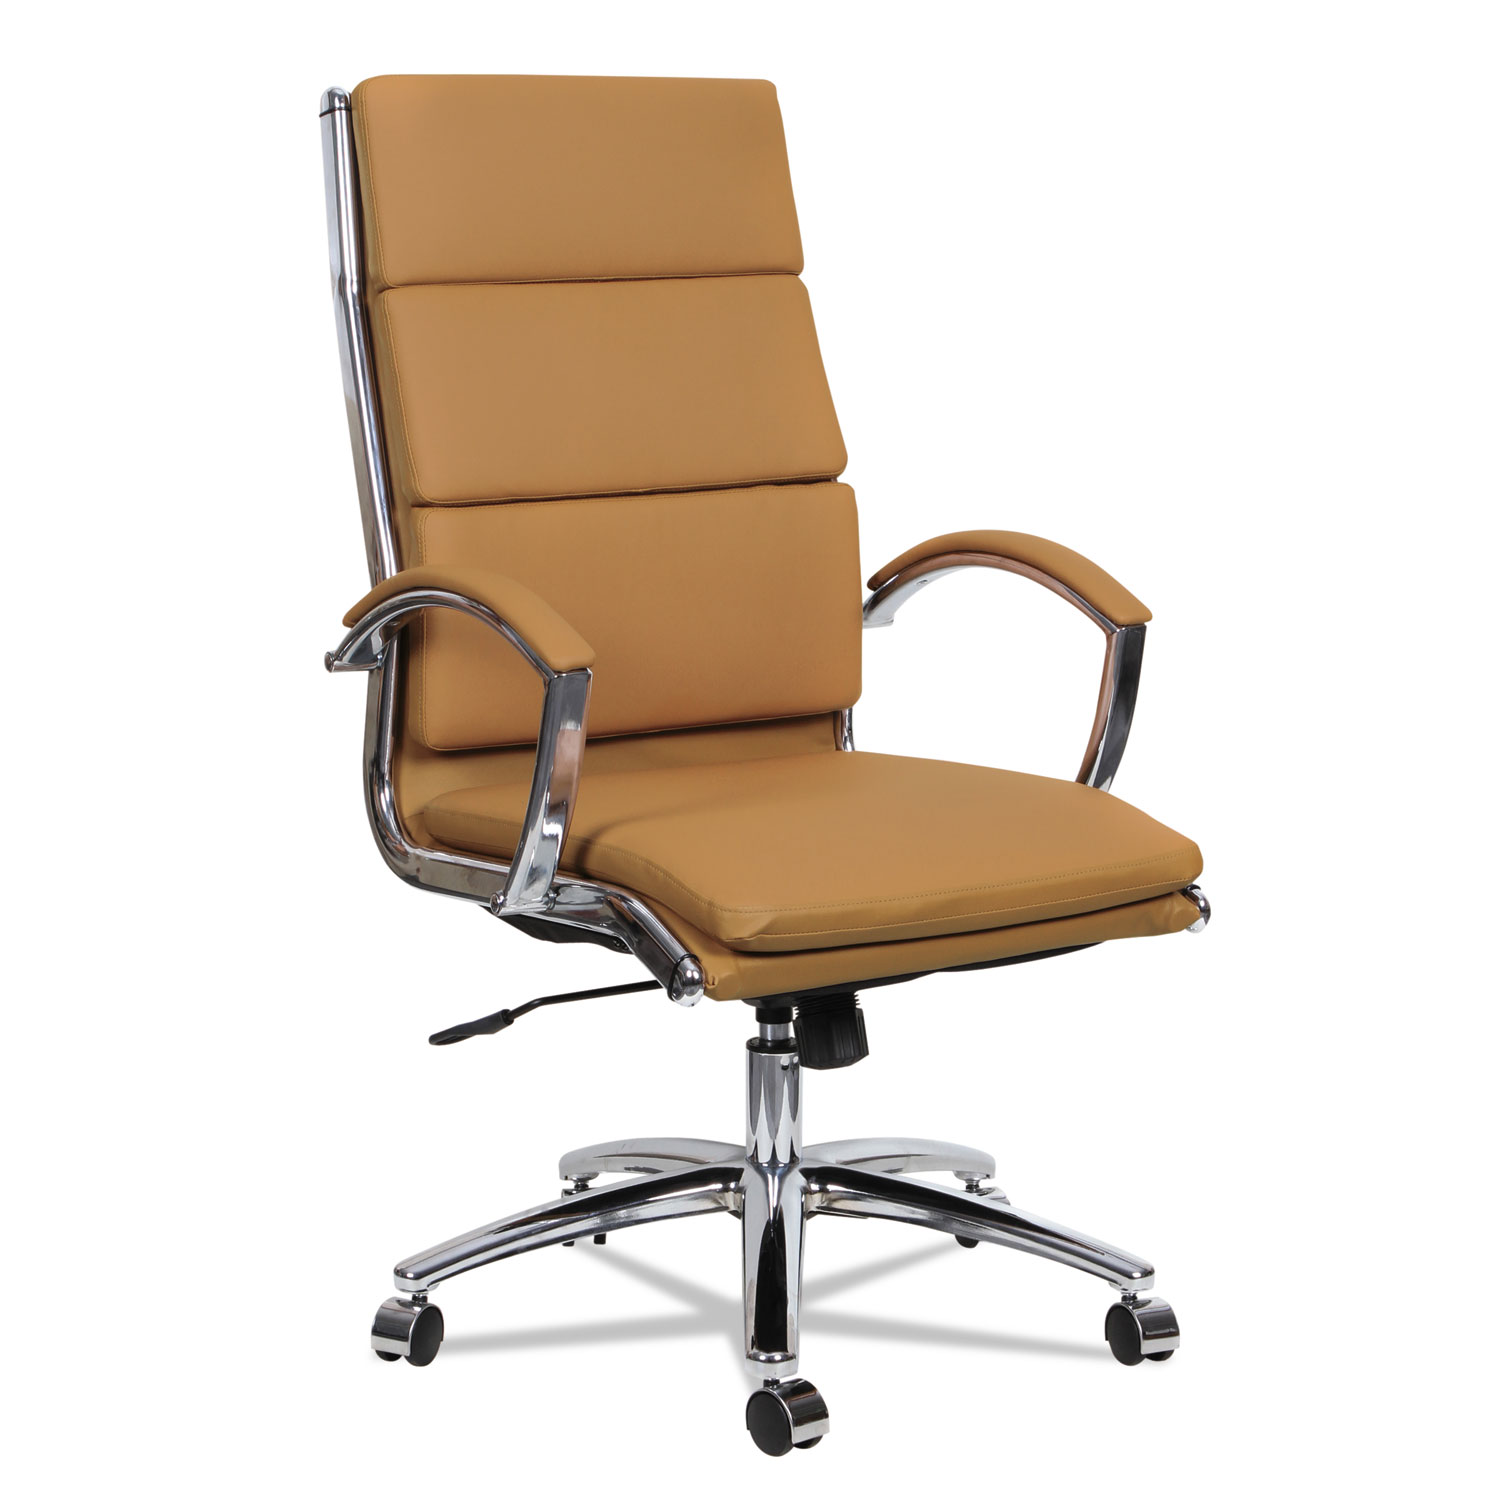 Alera Neratoli High-Back Slim Profile Chair, Supports up to 275 lbs., Camel Seat/Camel Back, Chrome Base